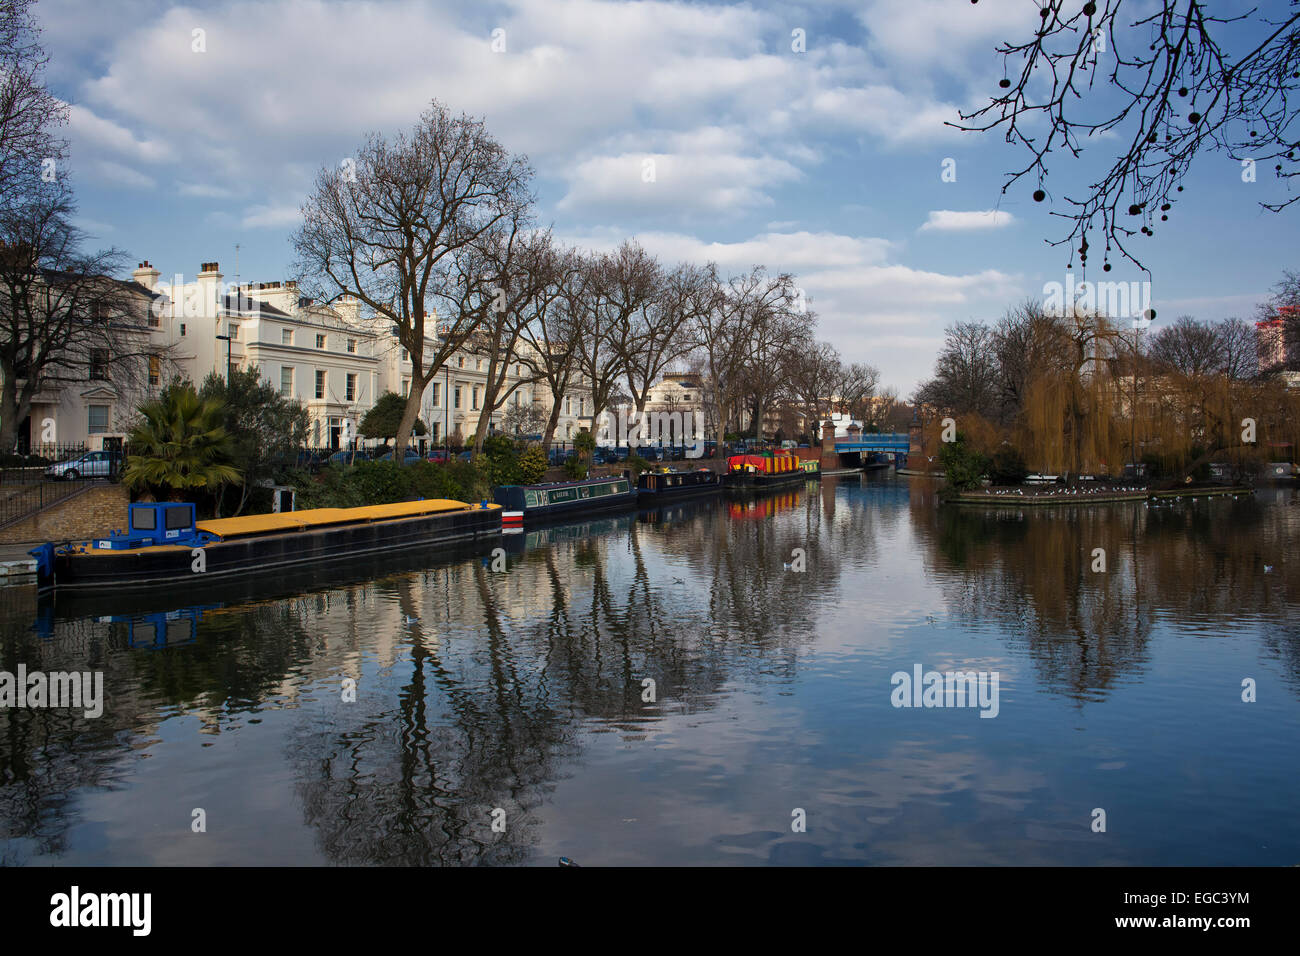 Canal, Little Venice, London W8 Stock Photo